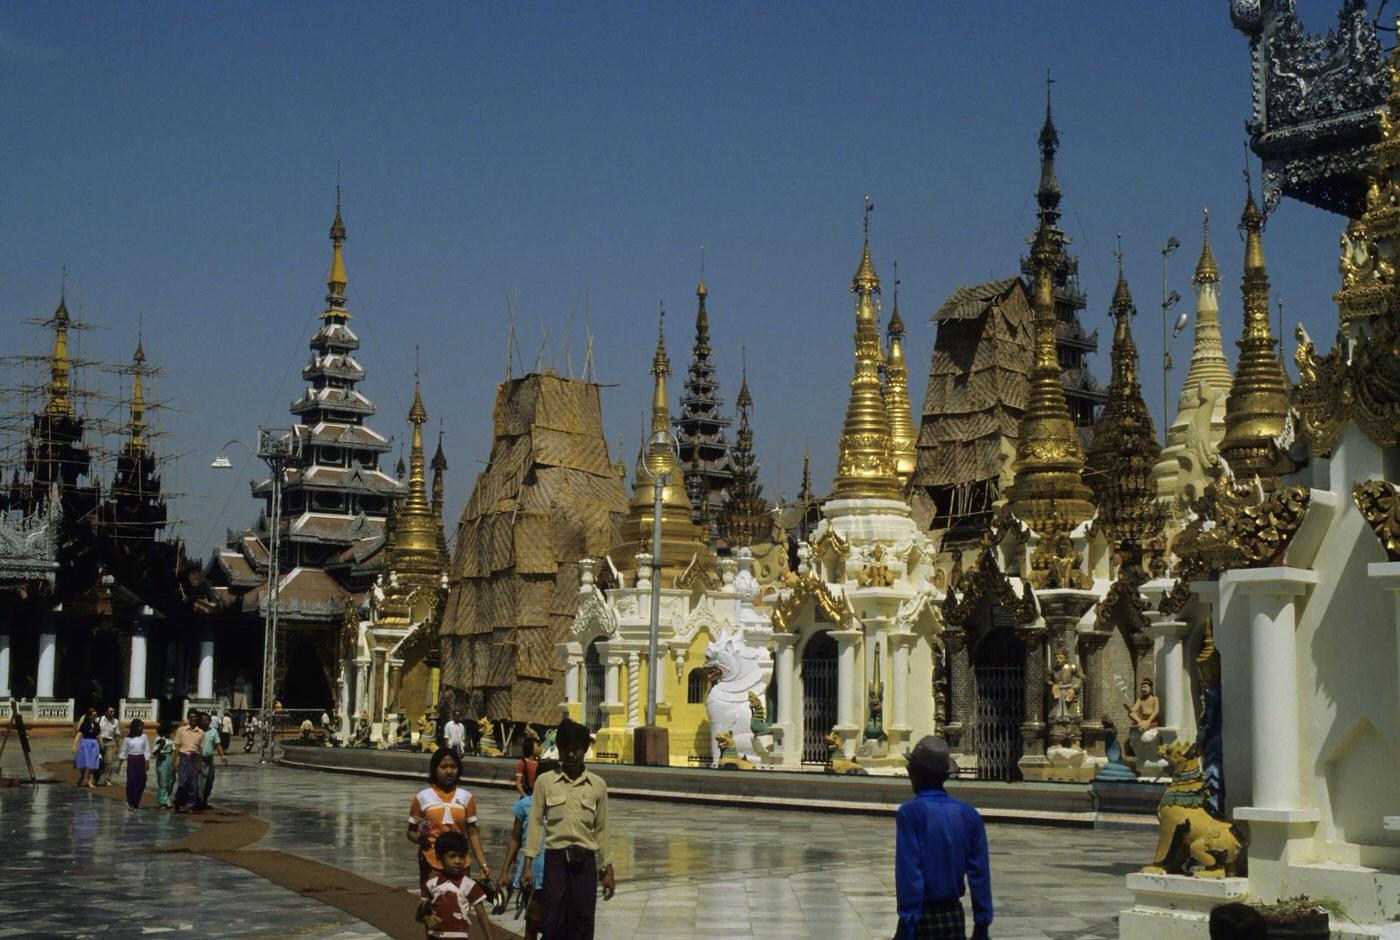 Burma, Rangoon Swedagon Pagoda, Guilded Stupas, 1981